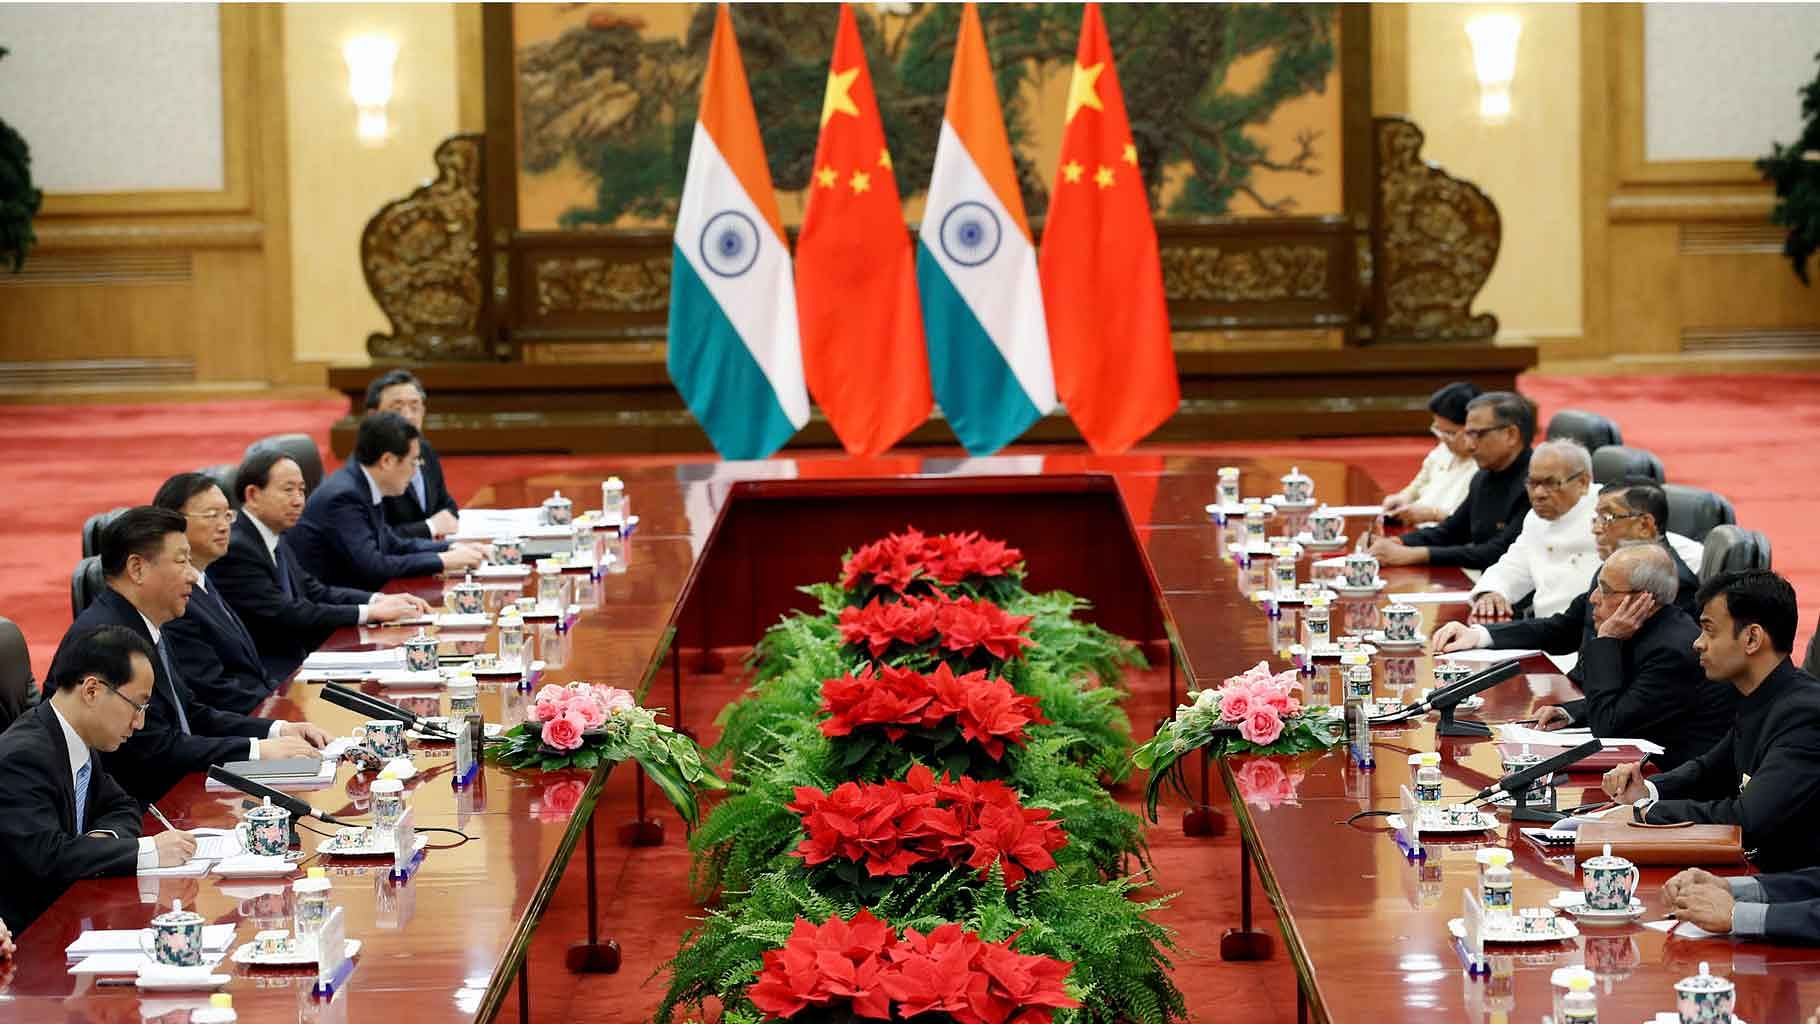  Pranab Mukherjee meets Chinese President Xi Jinping on May 26, 2016  (Photo Courtesy: Reuters)